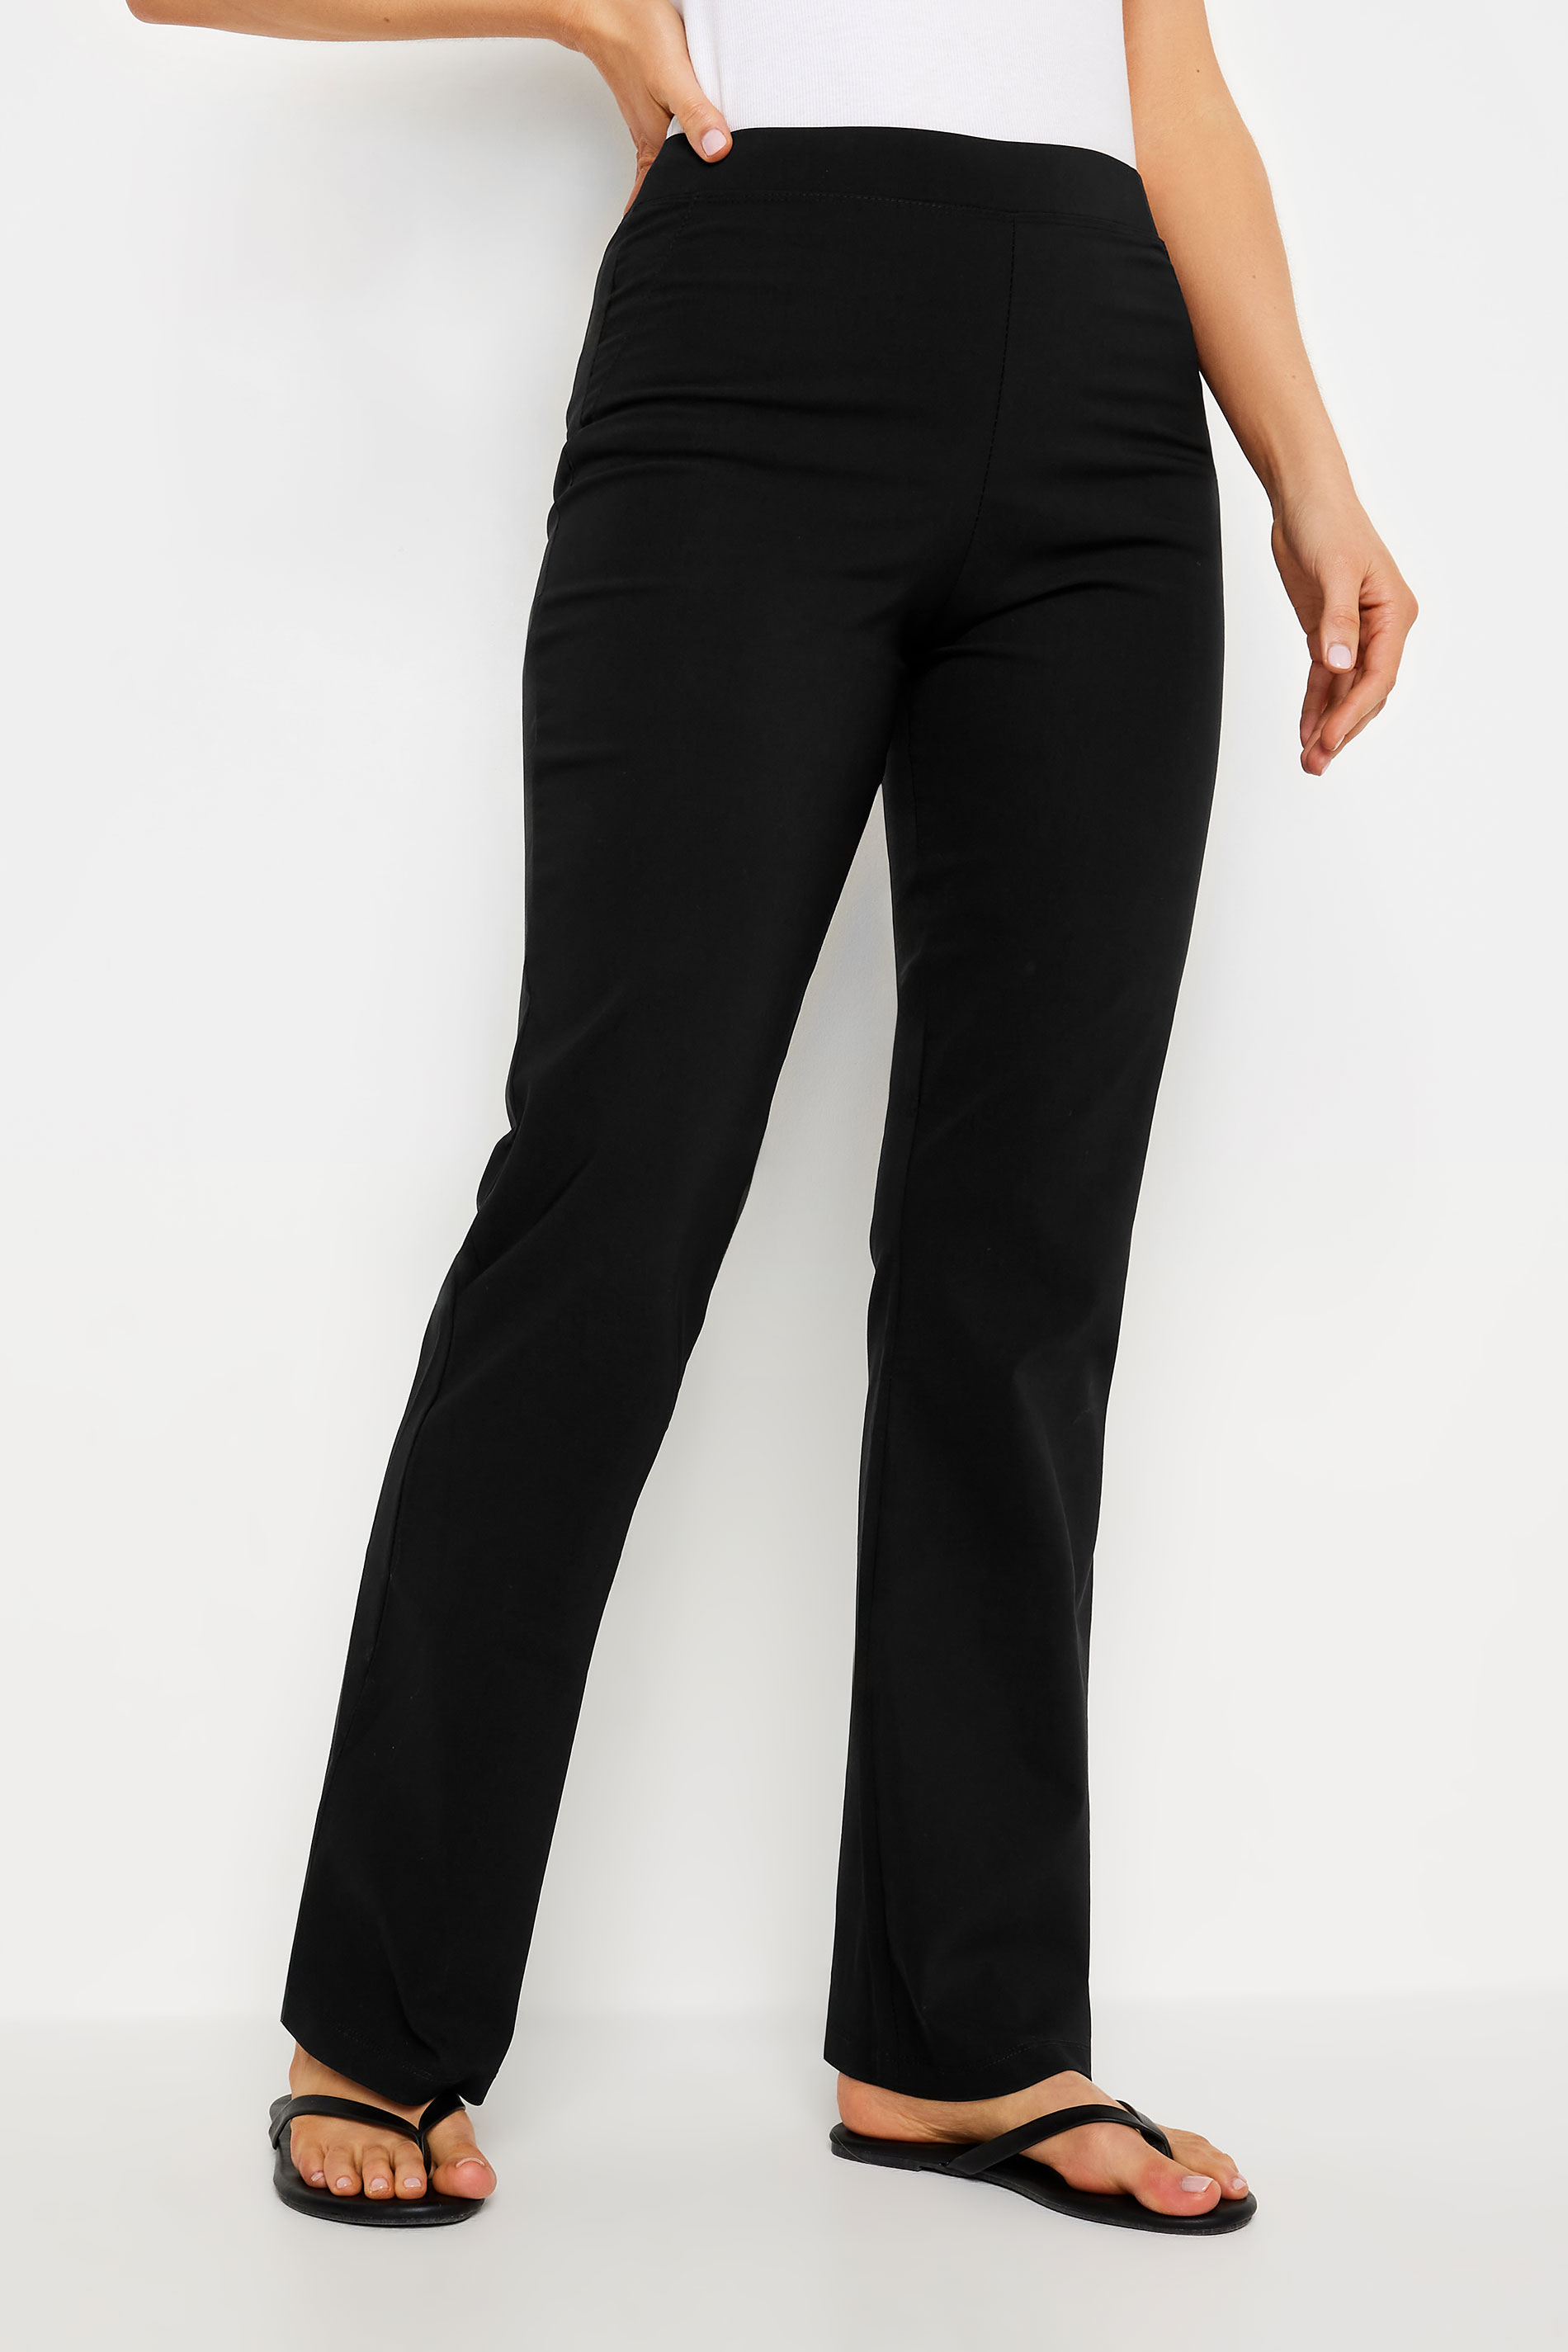 Tall Women's LTS Black Stretch Bootcut Trousers | Long Tall Sally 2